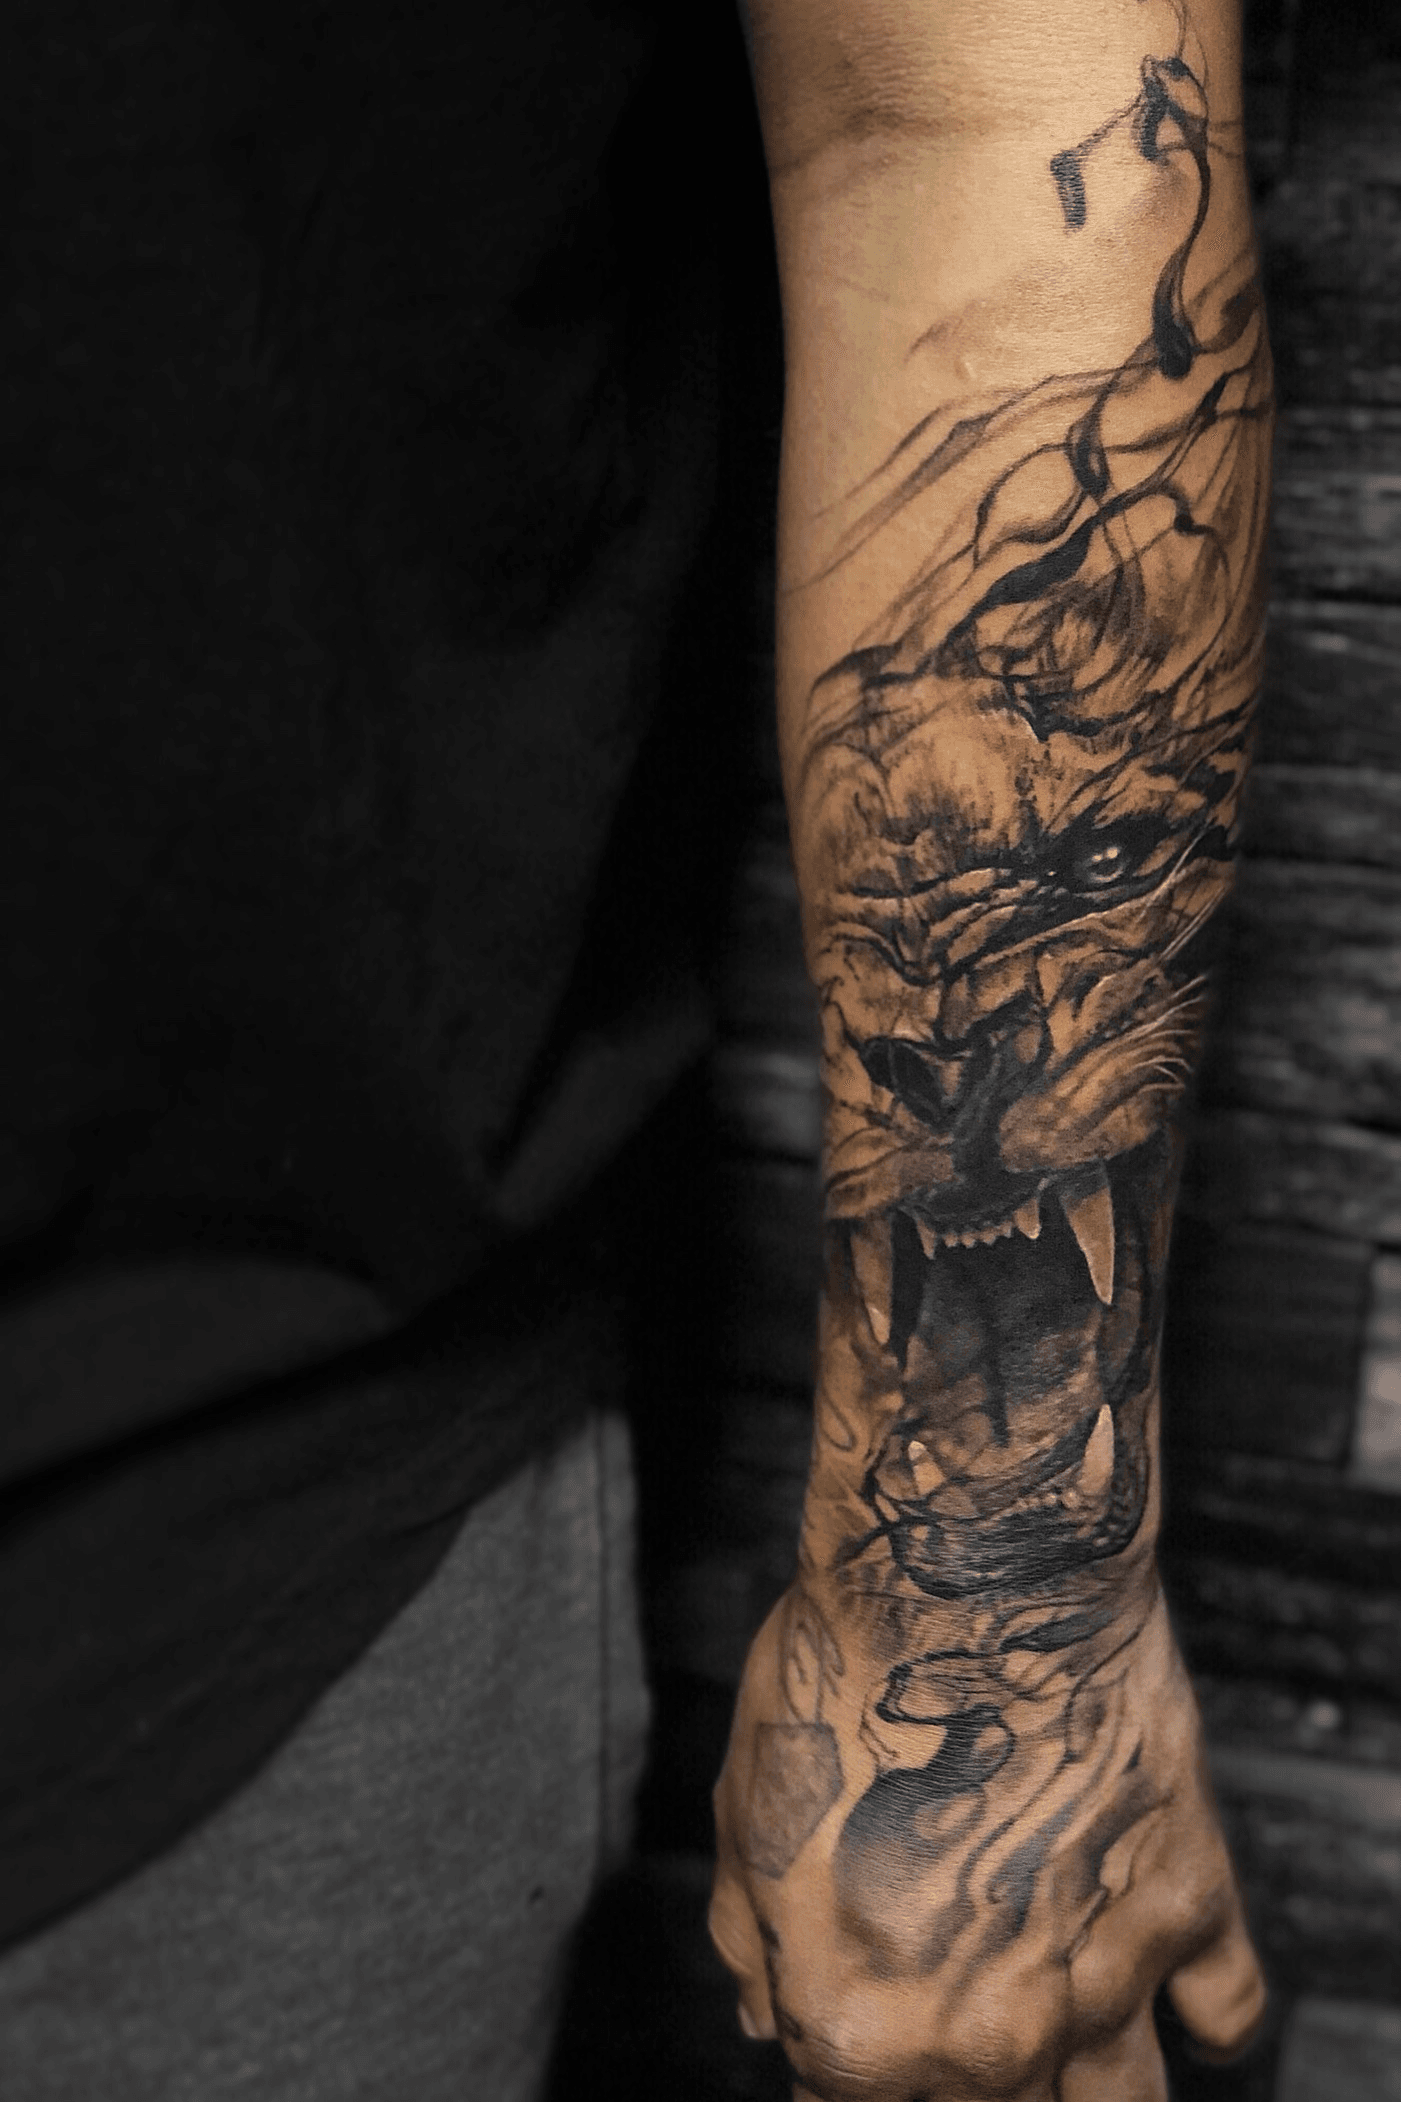 Tattoo uploaded by Dane Karlson • #surreal #blackandgrey #lion #portrait #wildlife #forearm #hand #floridatattooartist • Tattoodo